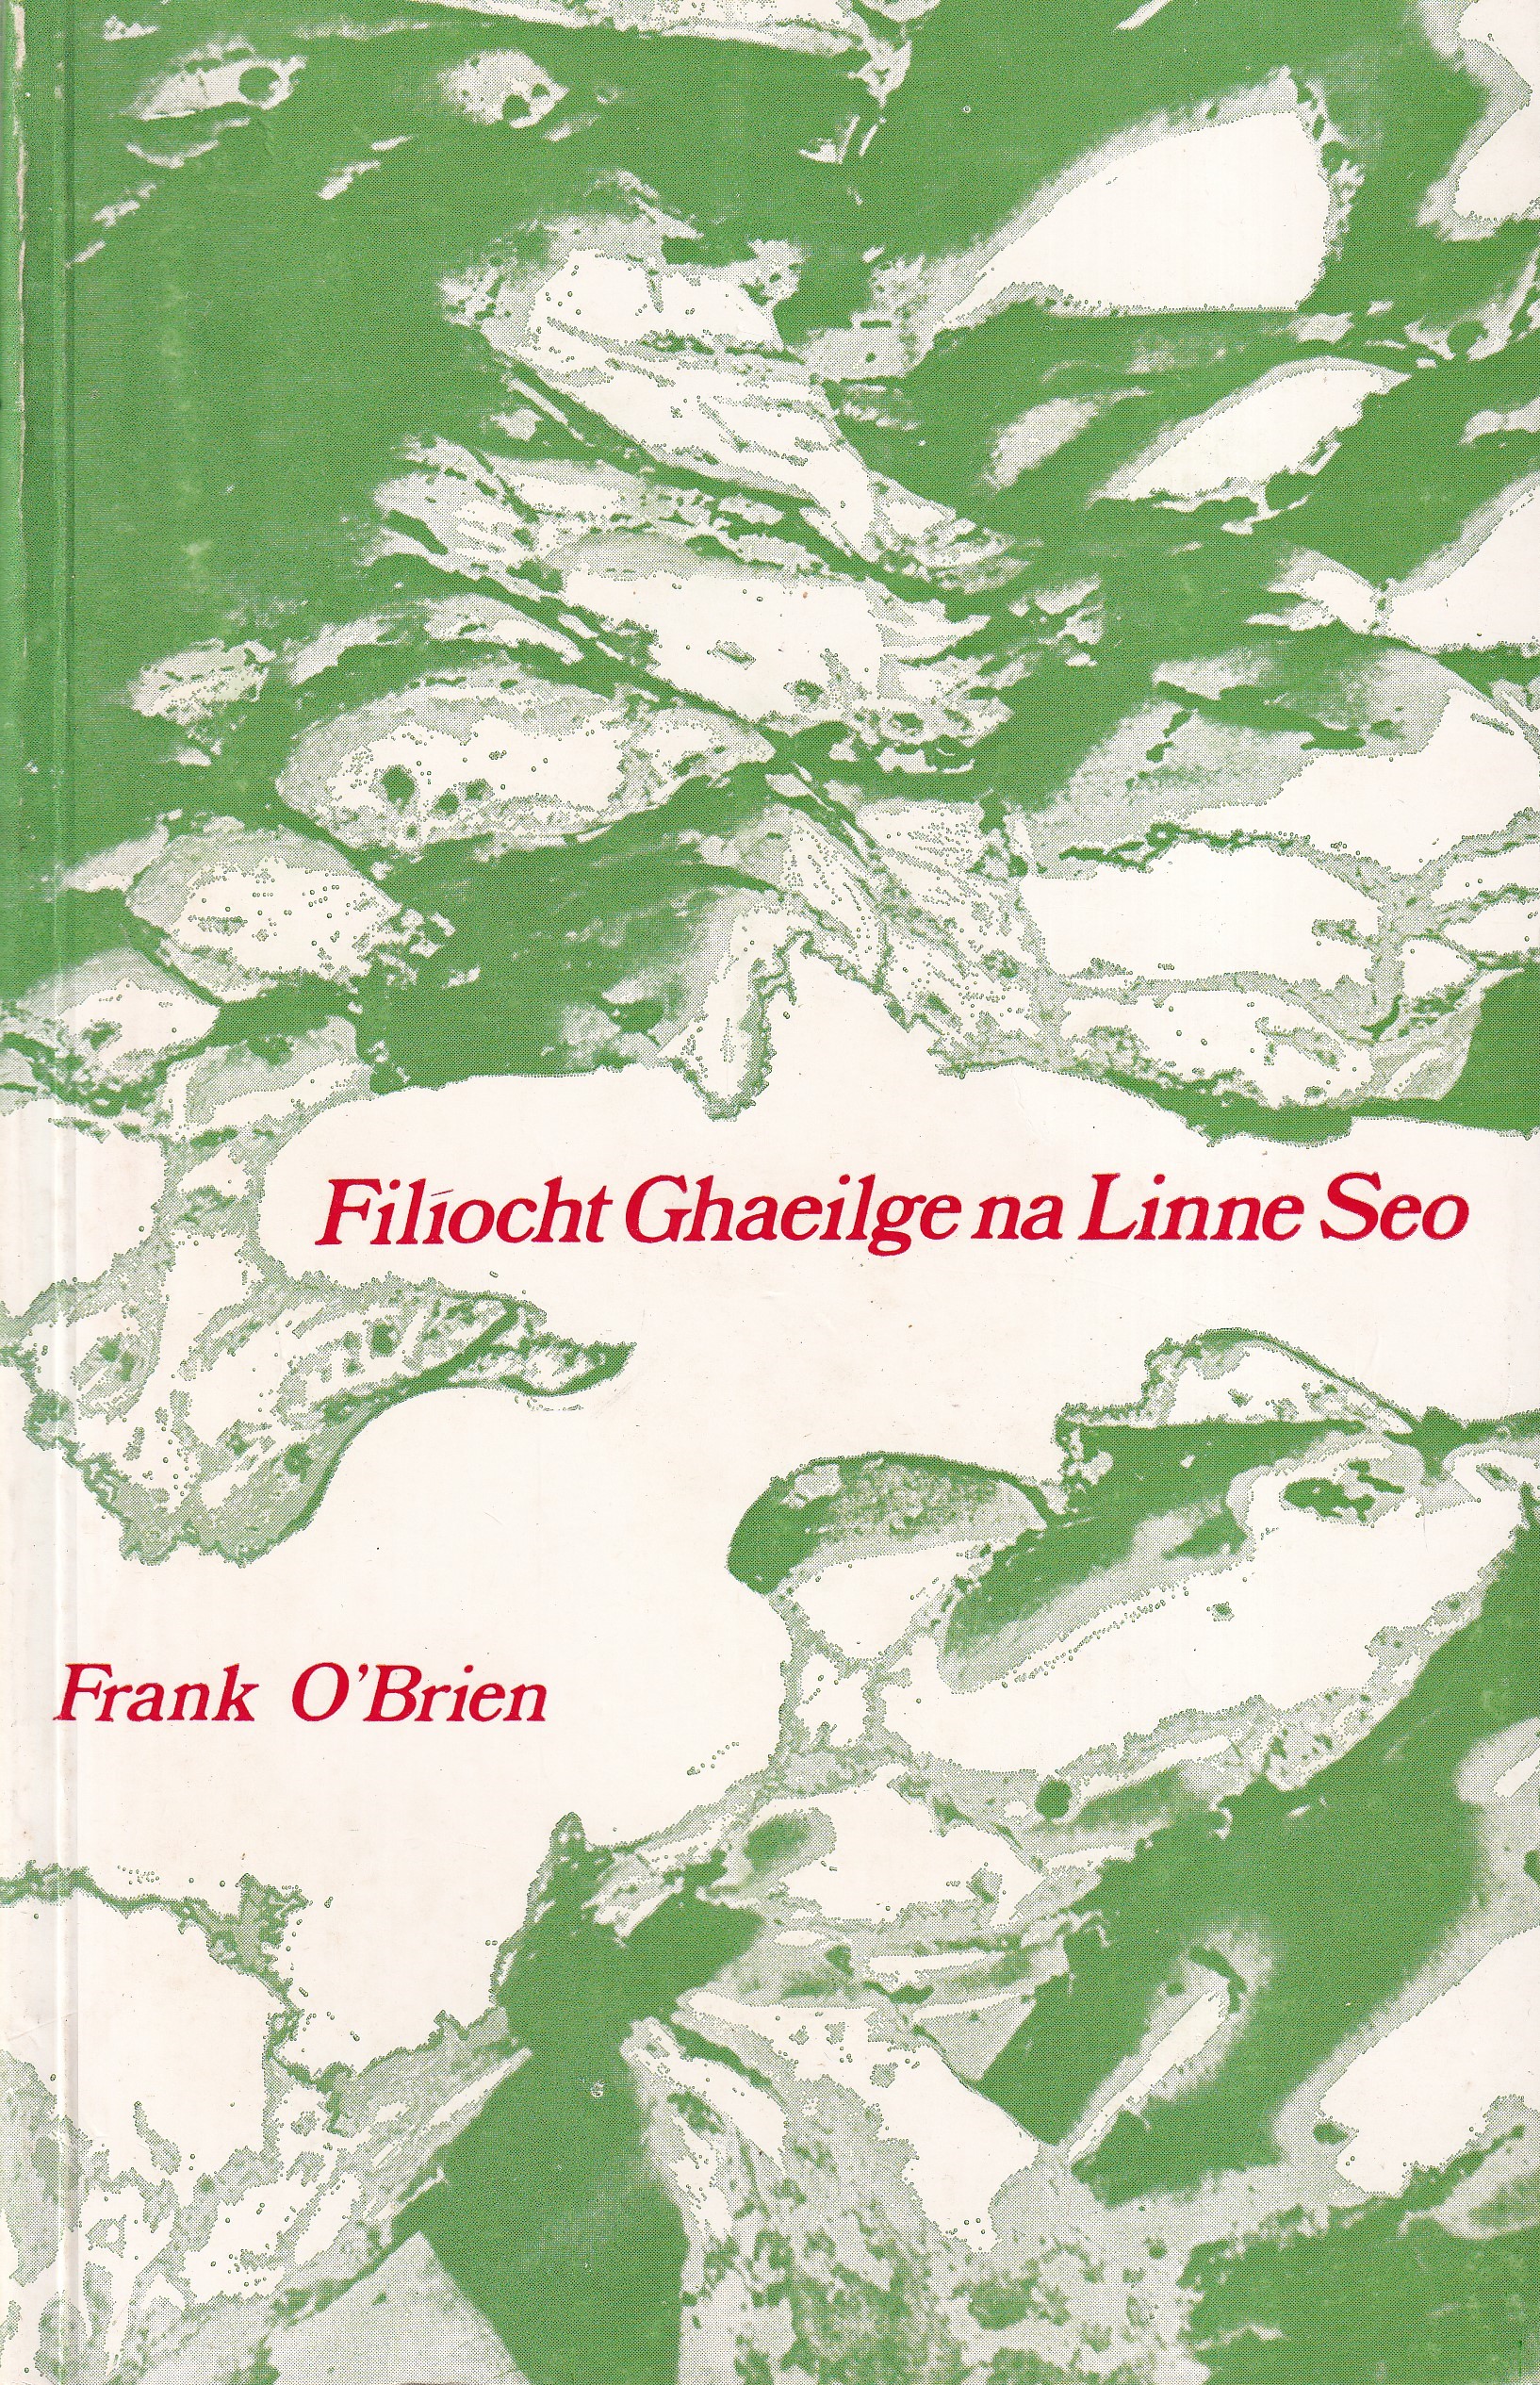 Filíocht Ghaeilge na Linne Seo by Frank O'Brien